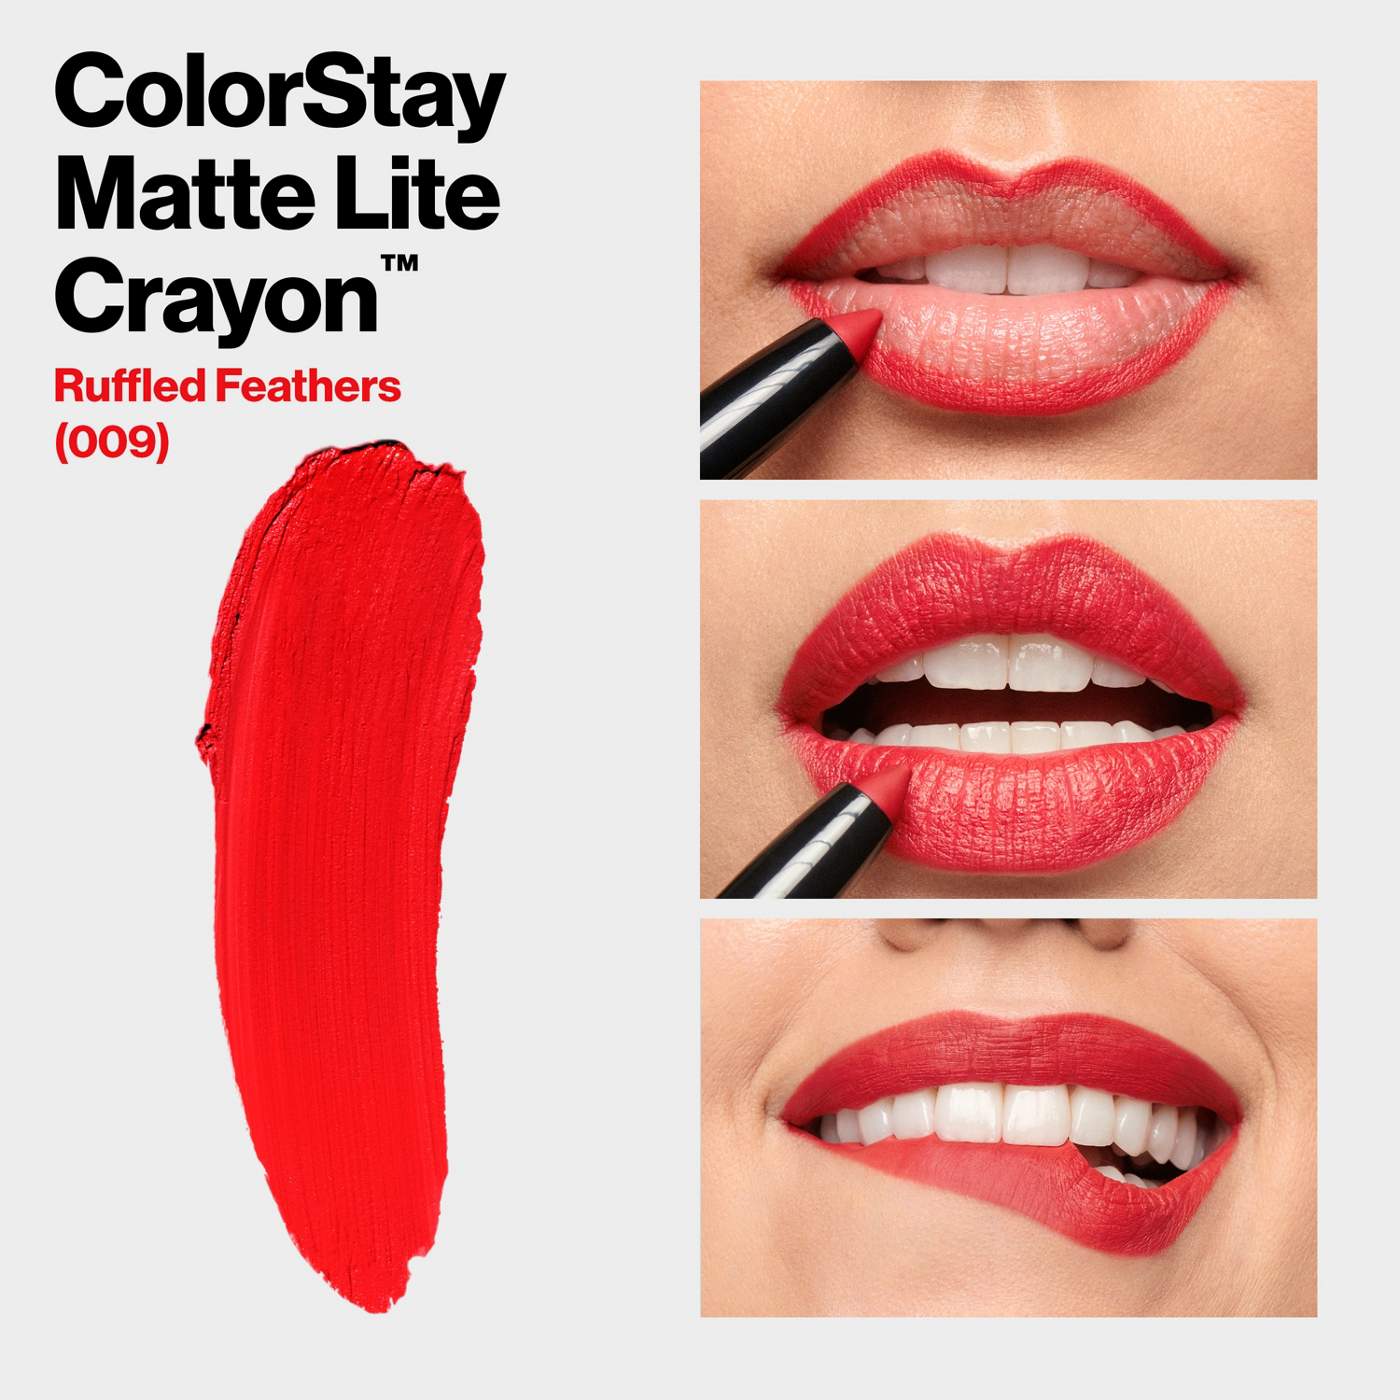 Revlon ColorStay Matte Lite Crayon Lipstick - Ruffled Feathers; image 5 of 7